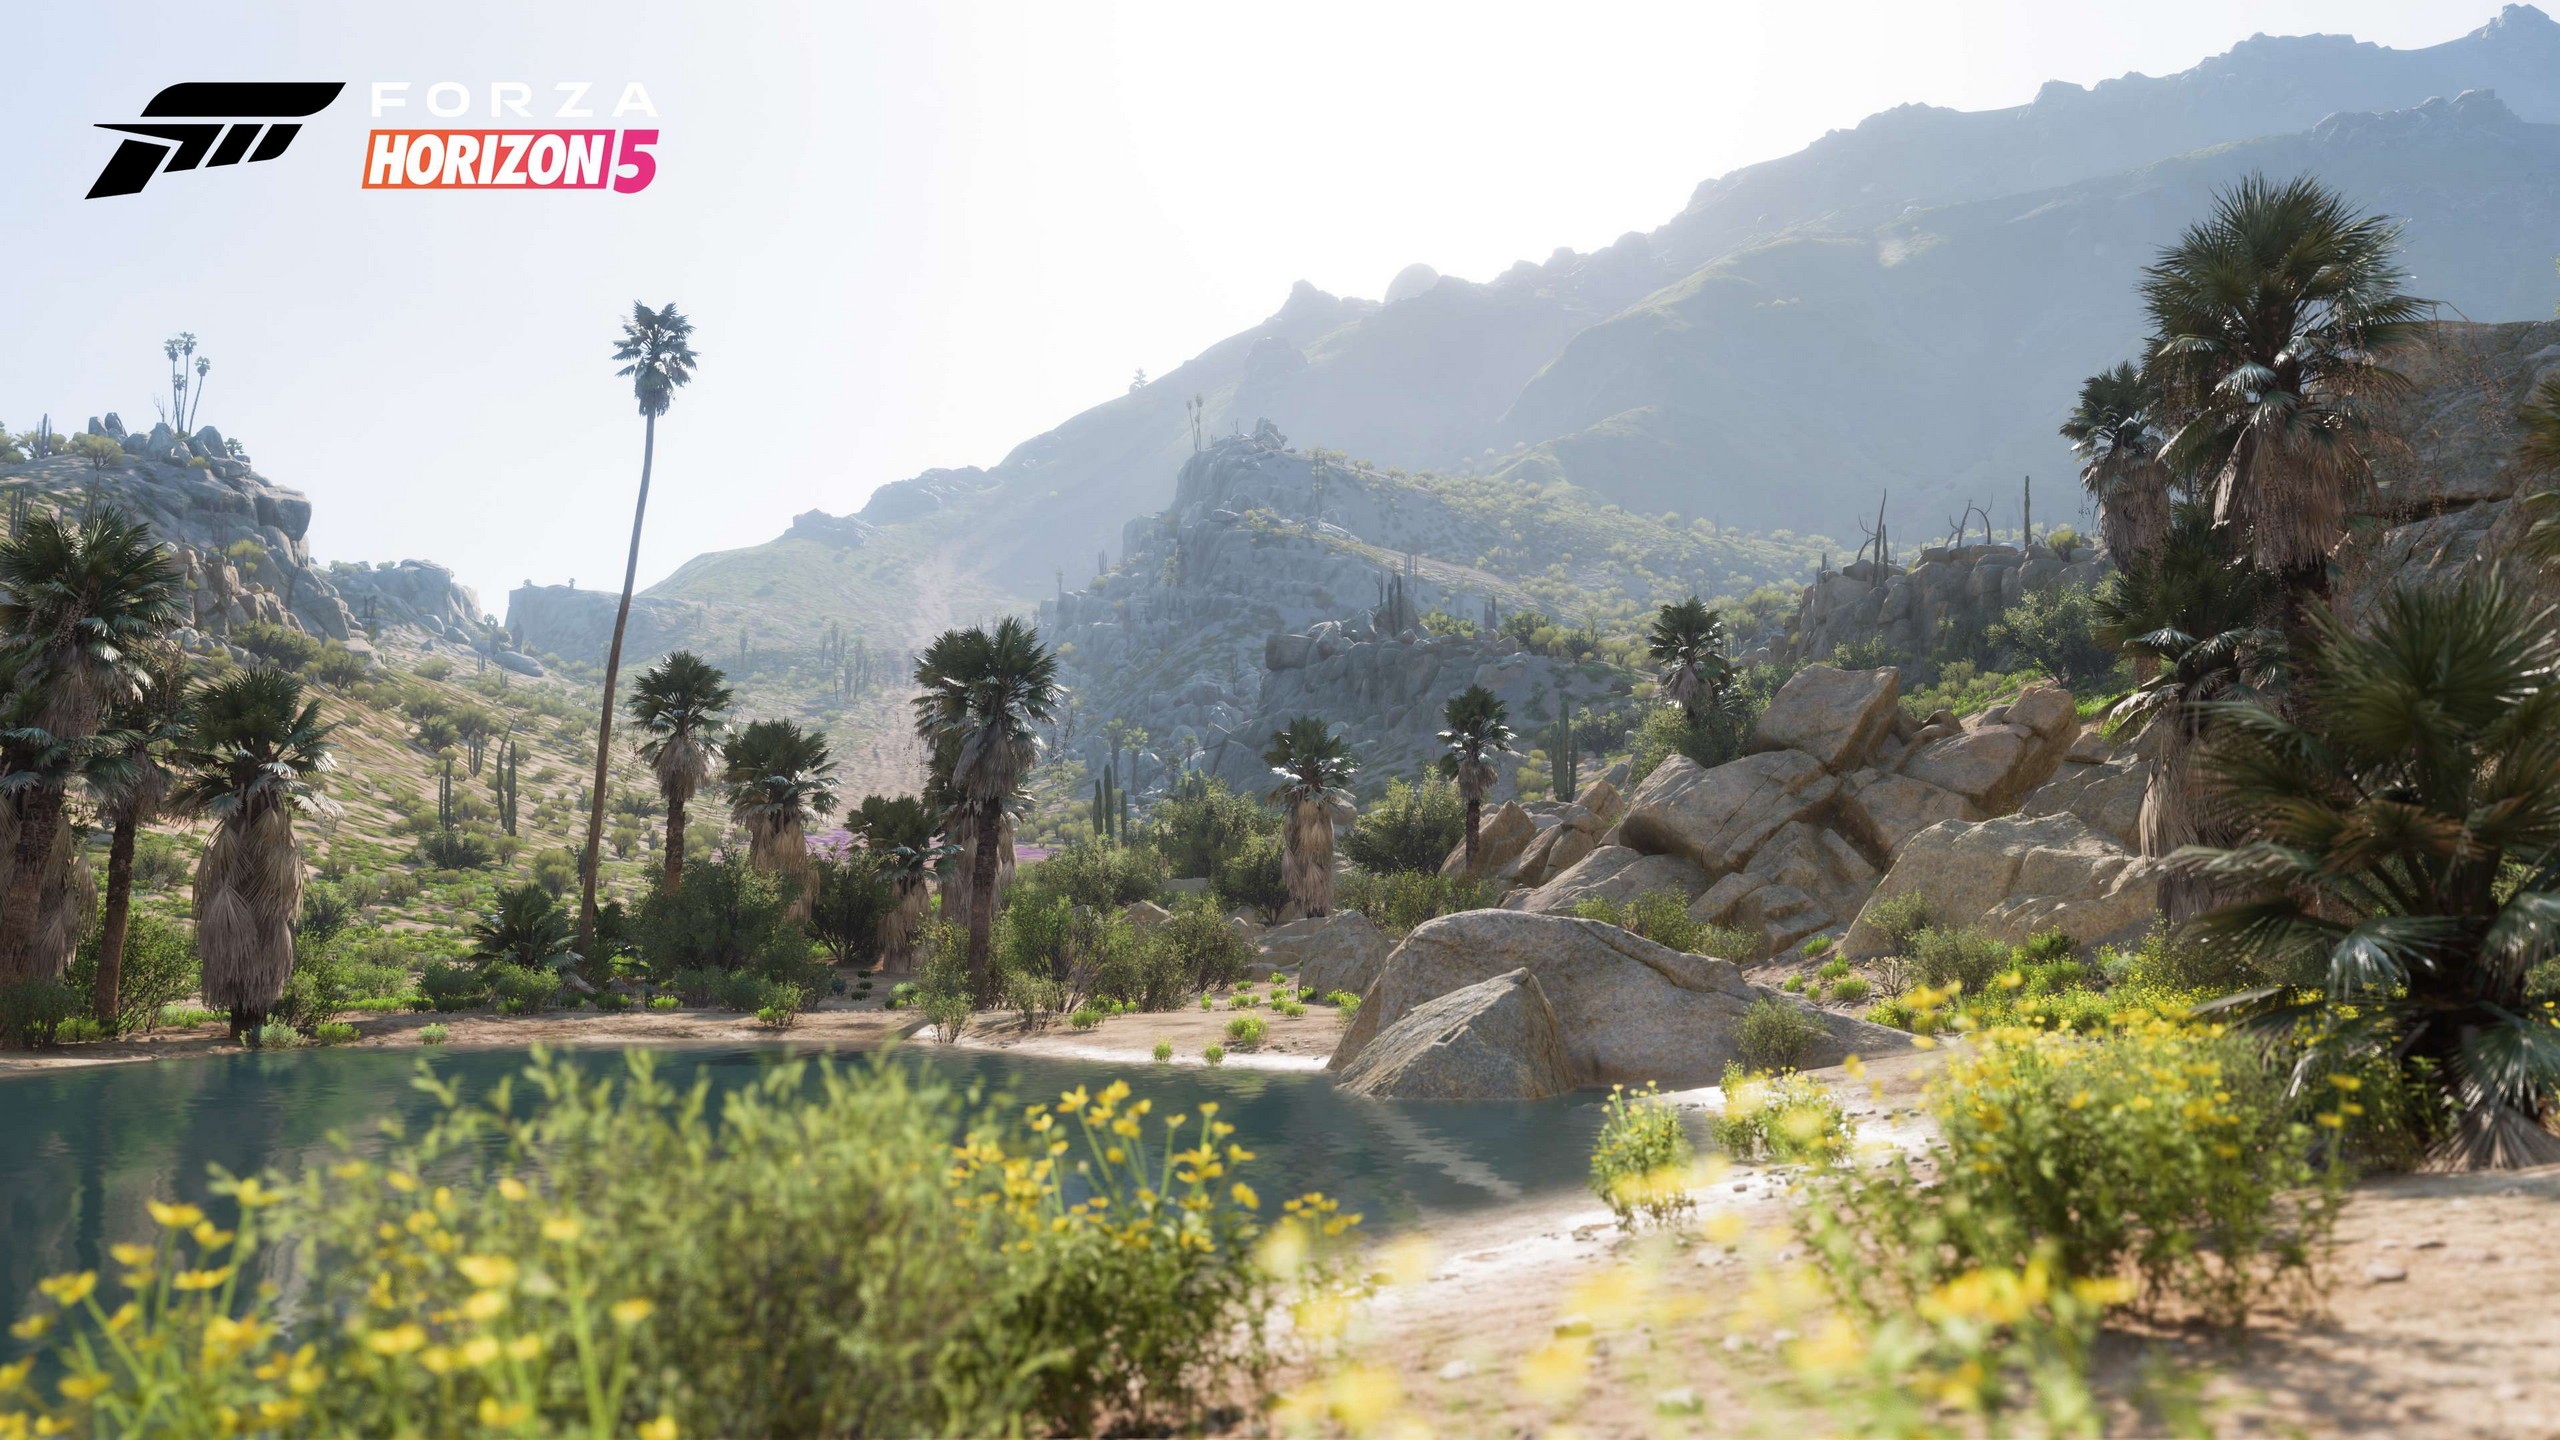 Forza Horizon 4 Gets Its Last New Car, Series 38 to Introduce “Mixtapes” -  autoevolution